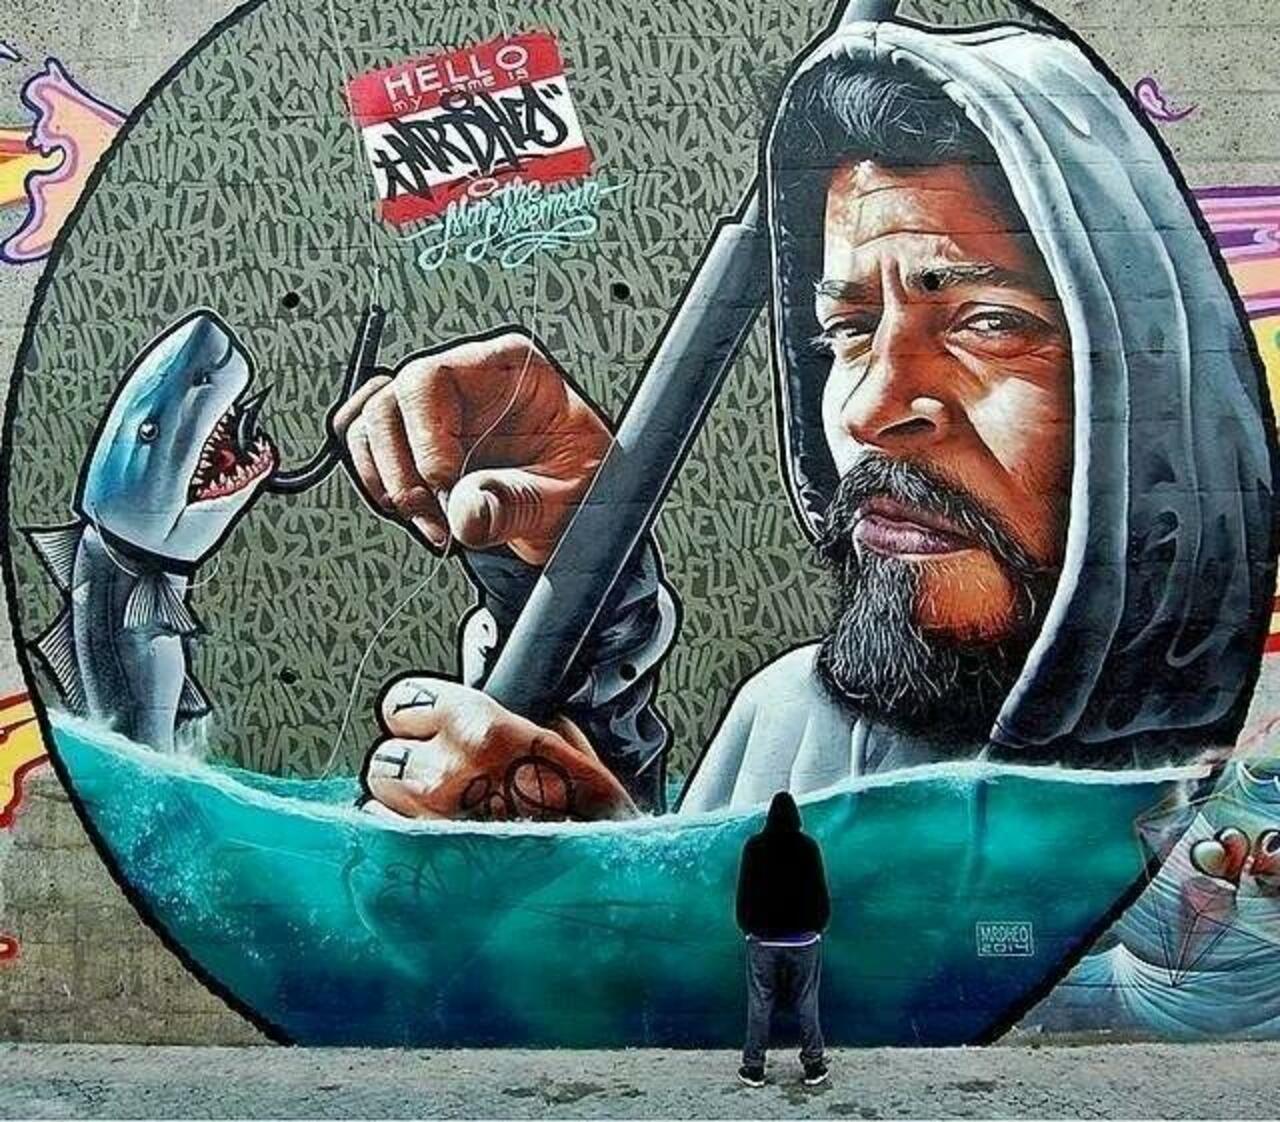 “@UffiziGraffiti: By Mr. Dheo #mural #streetart #urbanart #graffiti #art http://t.co/1NVnC0XZPk